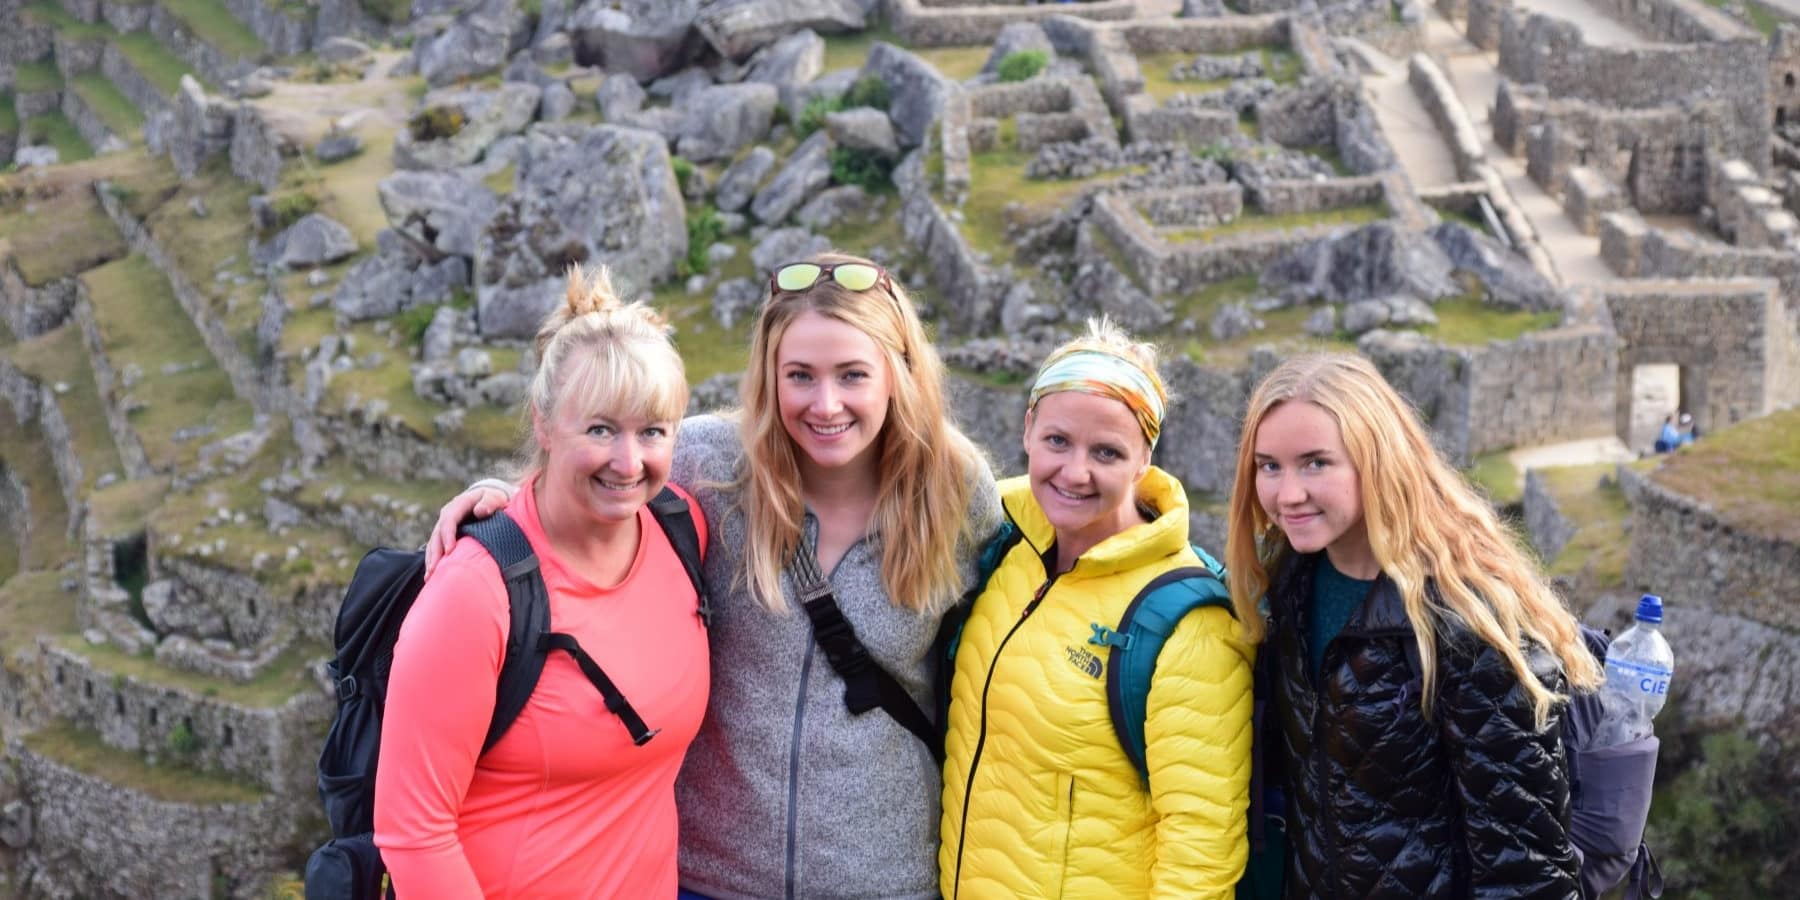 Machu Picchu Hiking, Biking, and Rafting Adventure